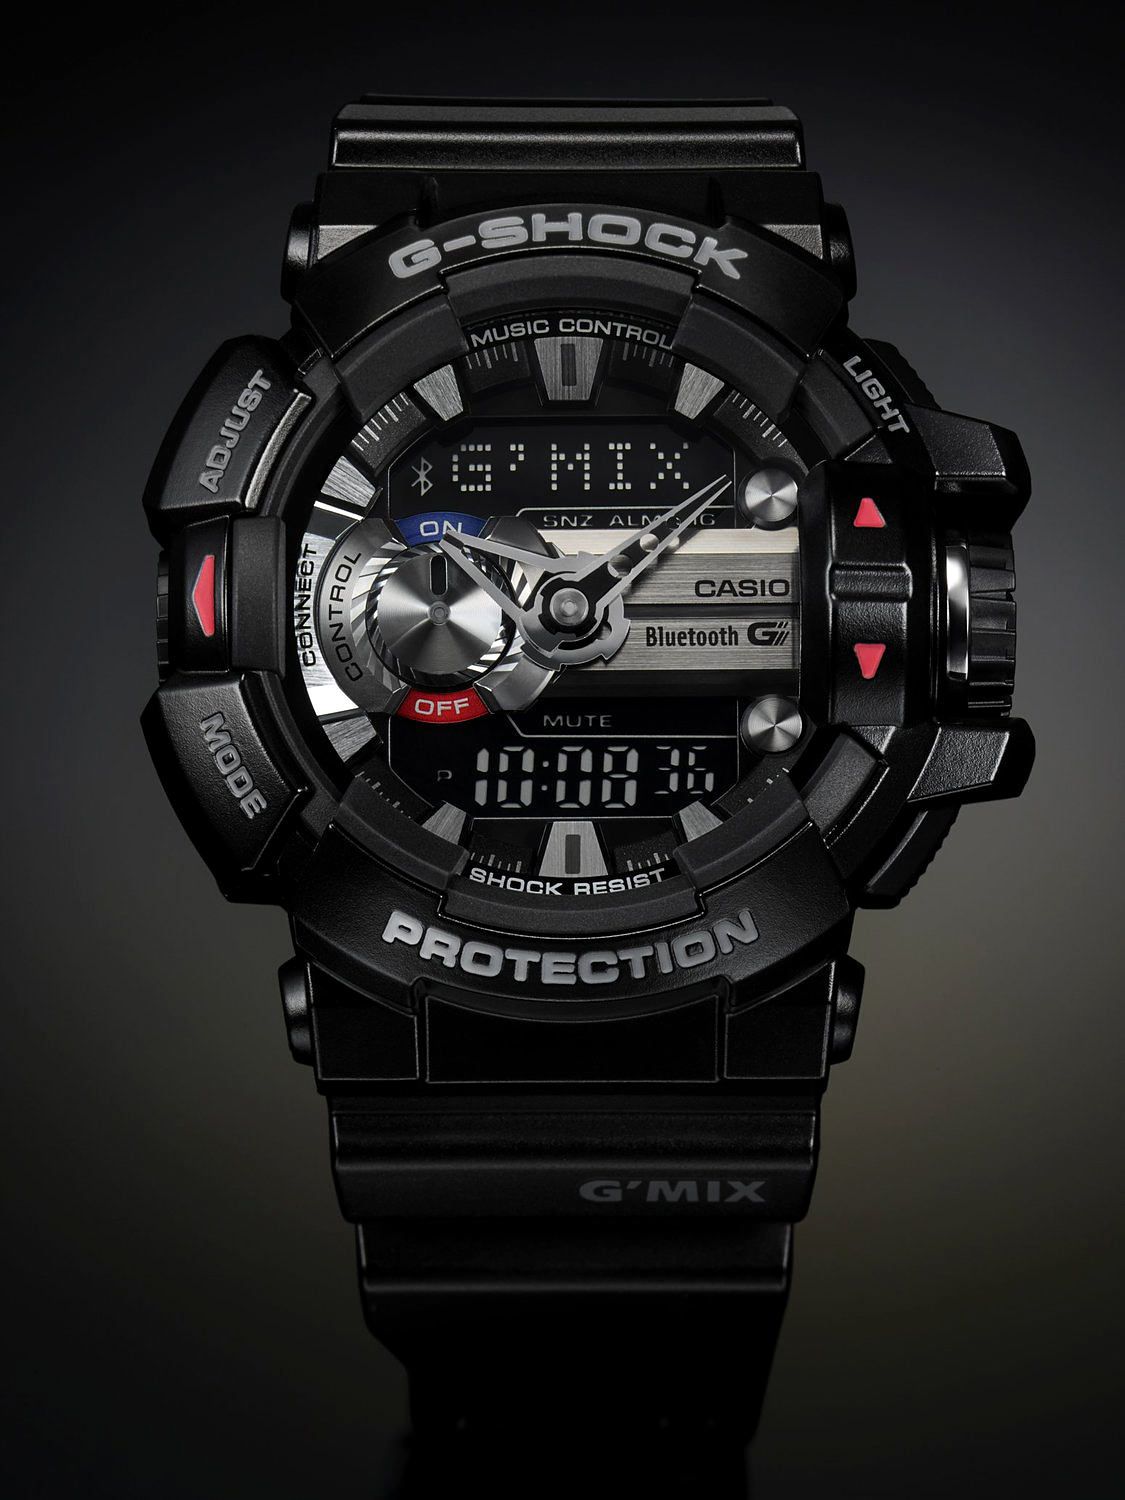 Reasons Why You Should a Casio G Shock Watch